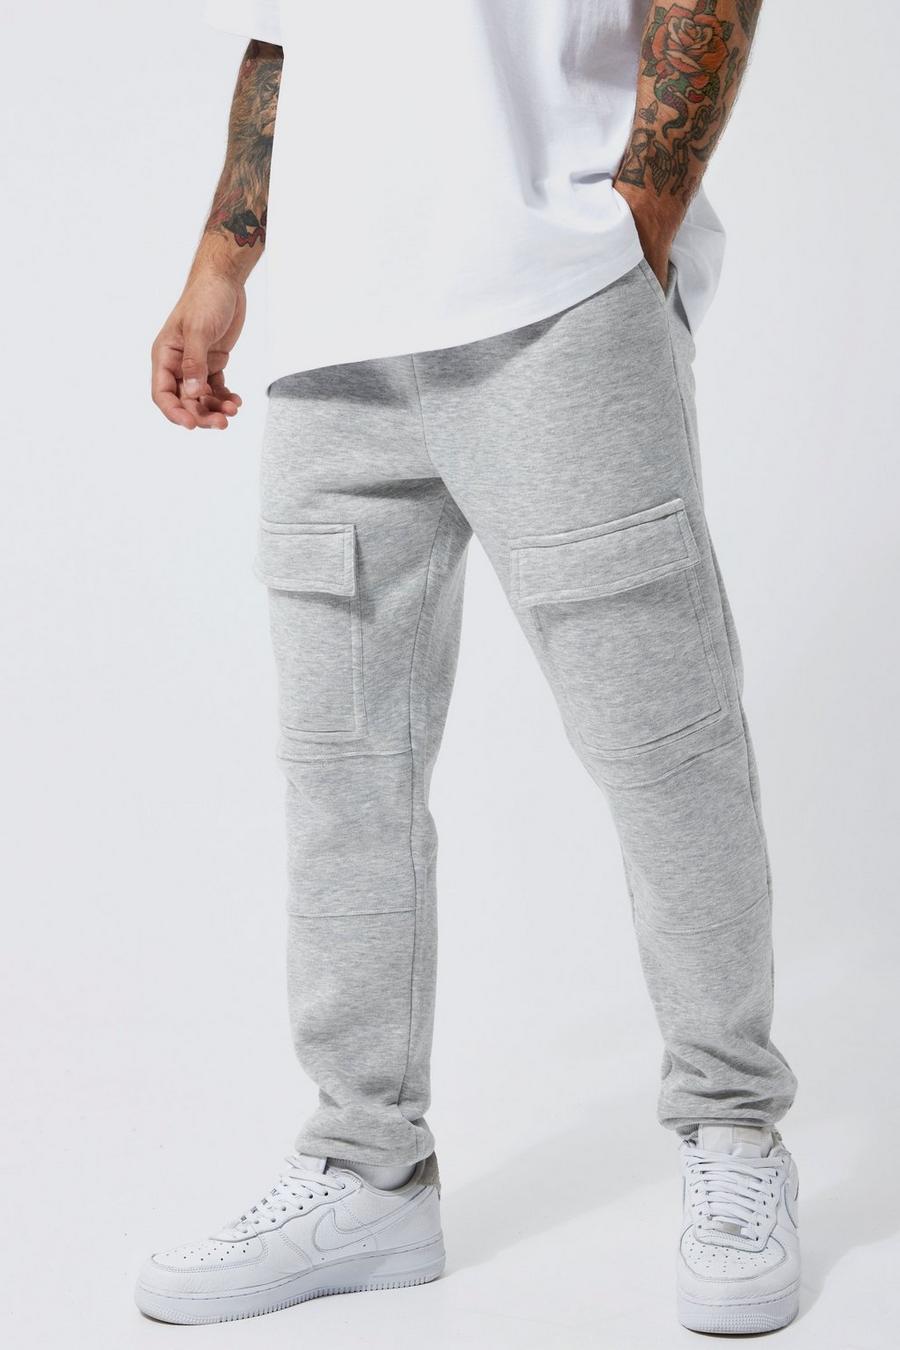 Pantaloni tuta Slim Fit stile Cargo, Grey marl grigio